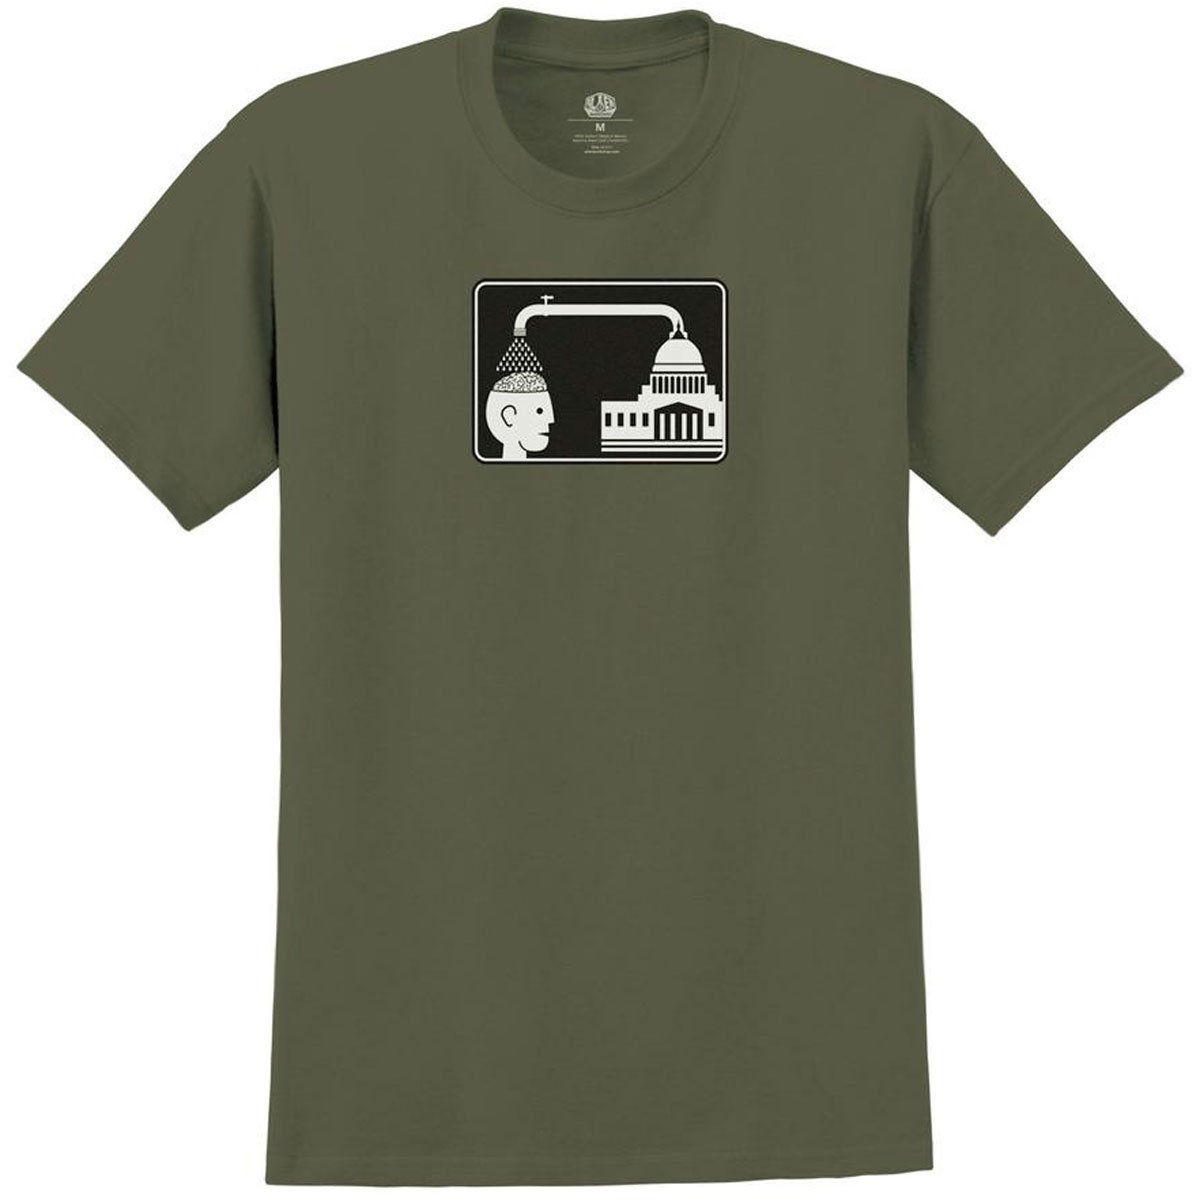 Alien Workshop Brainwash T-Shirt - Olive image 1